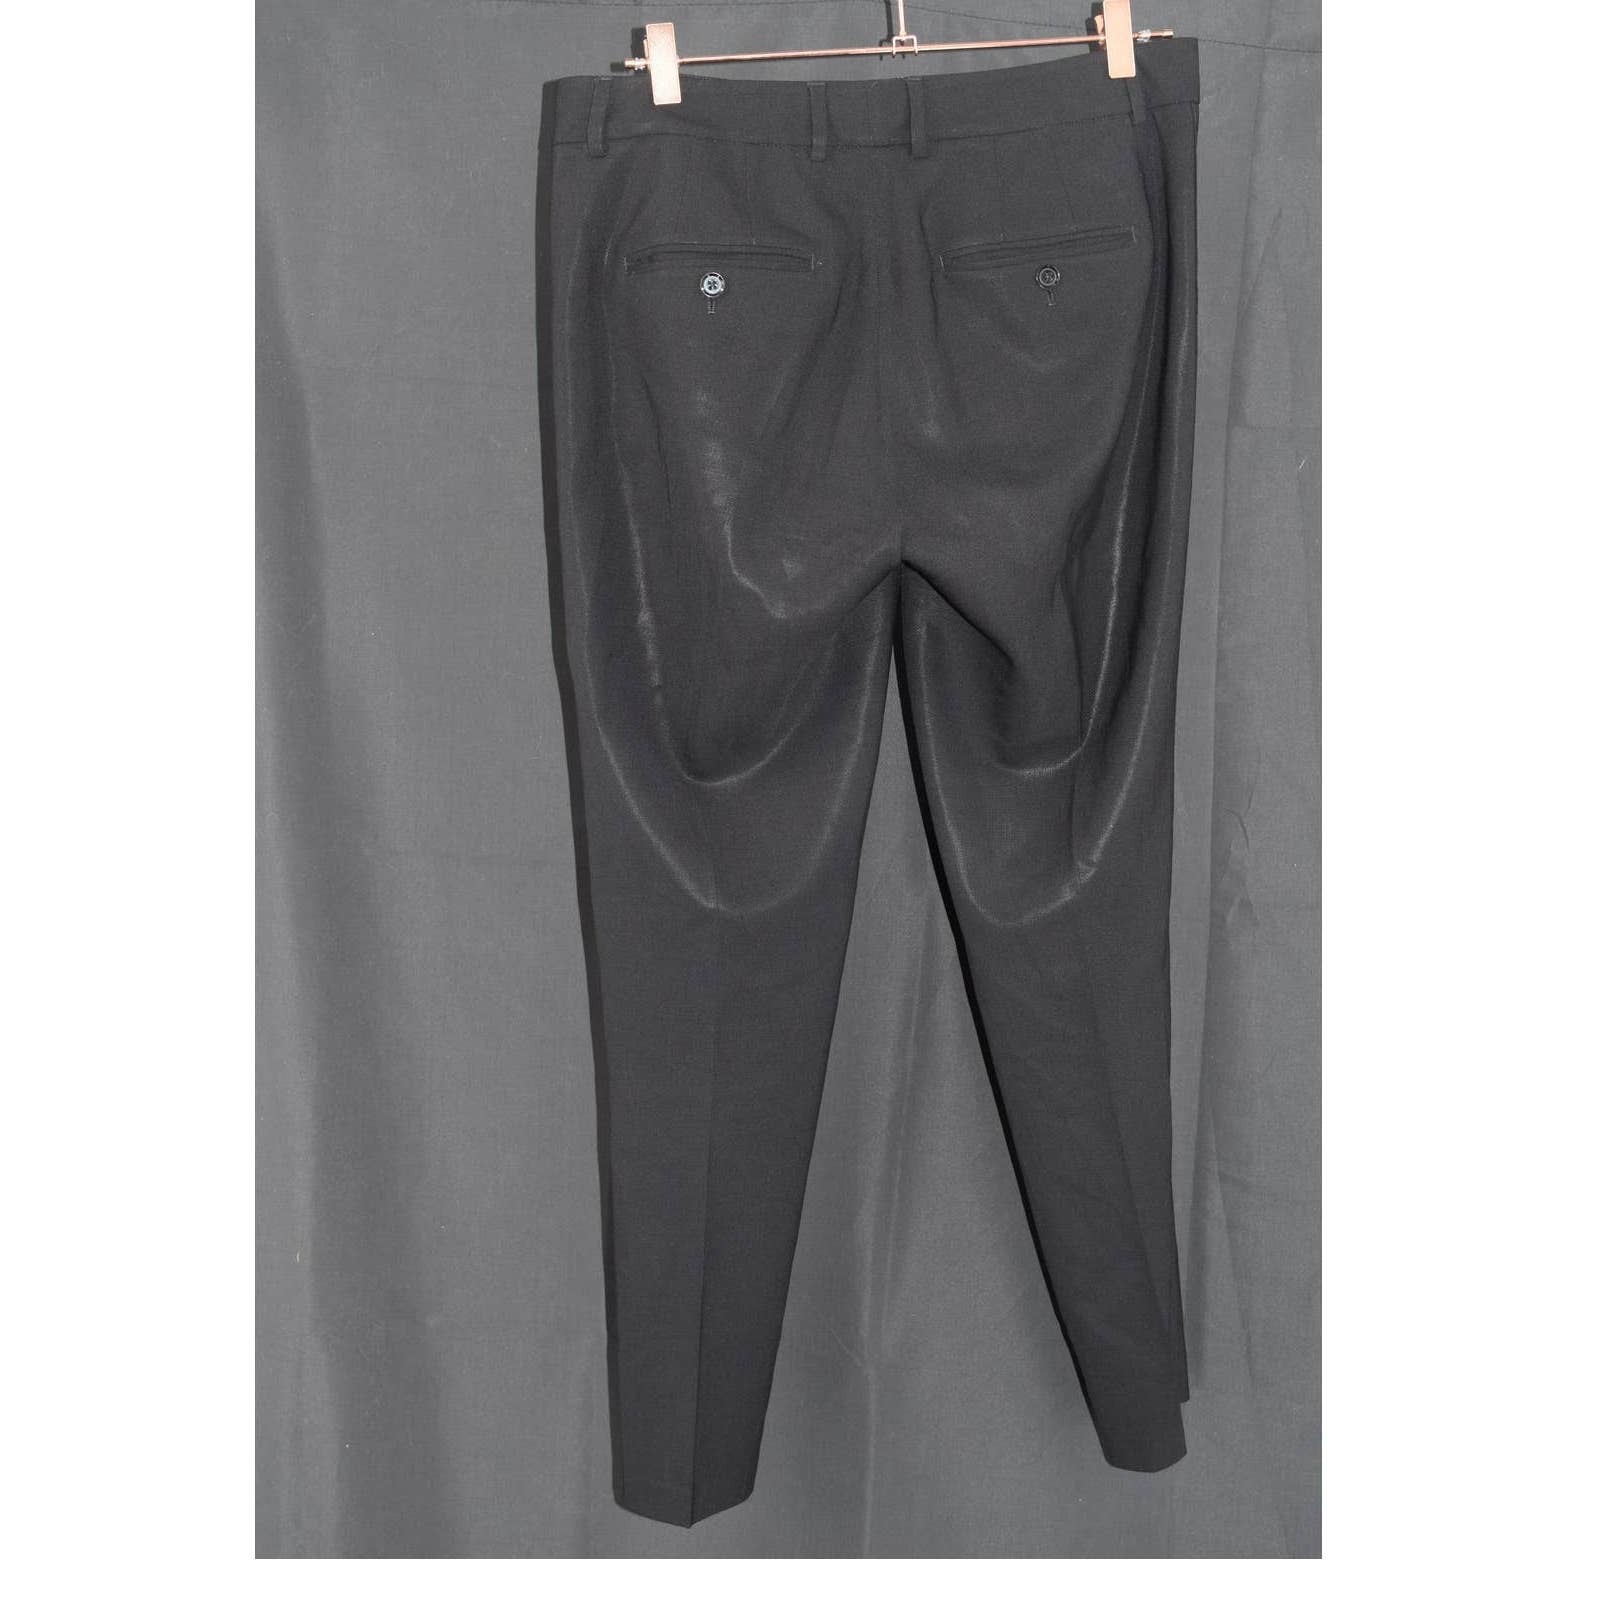 Vince Black Wool Trousers Flat Front Pants - 6